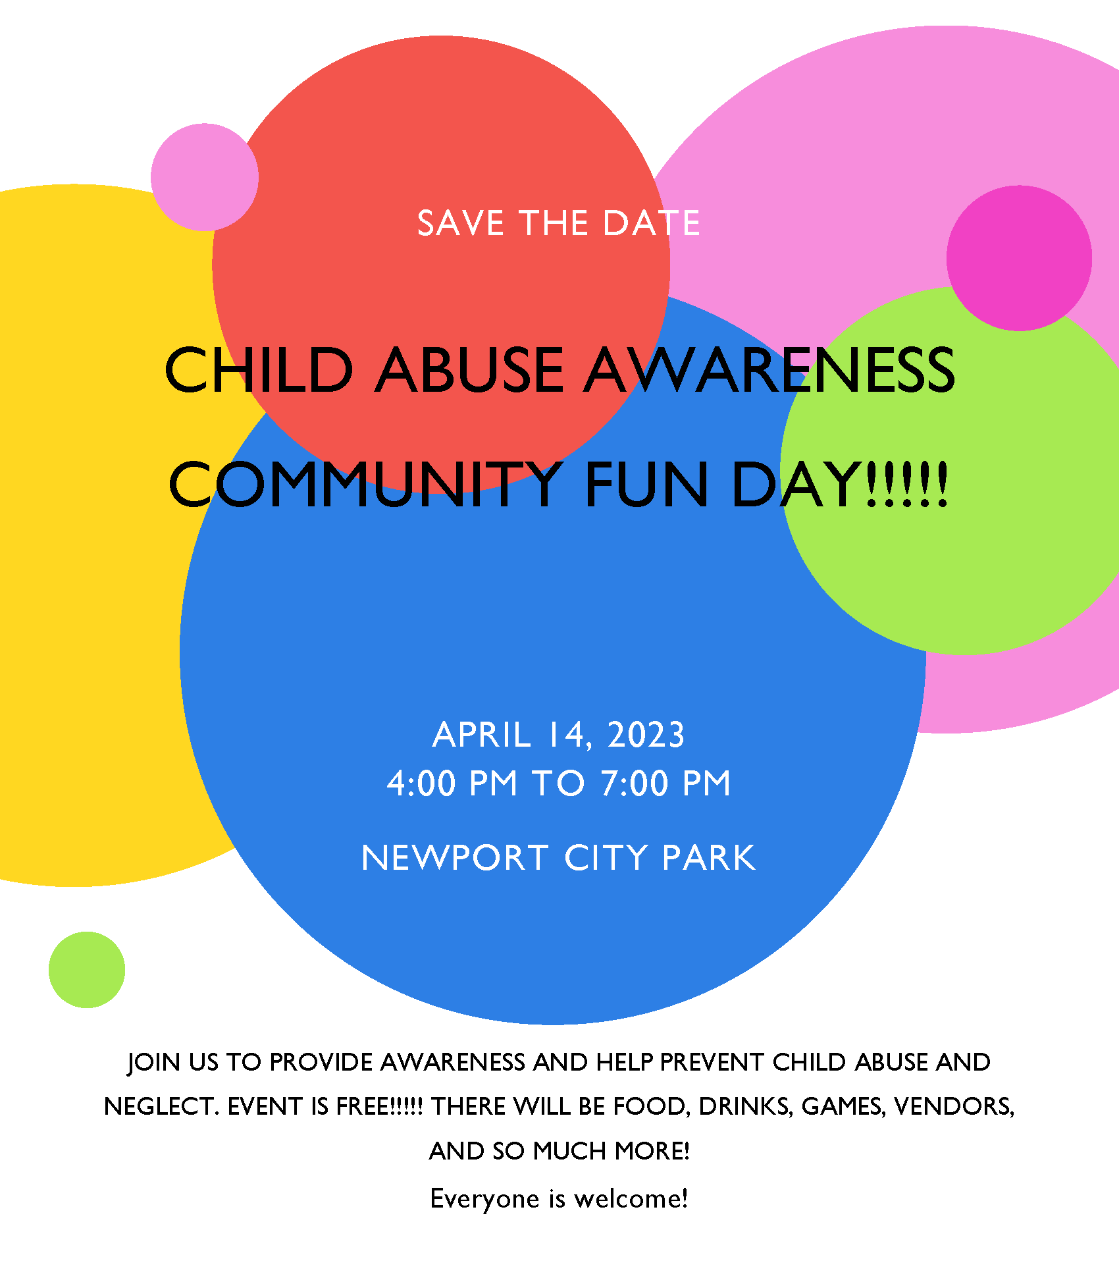 Child Abuse Awareness Community Fun Day!